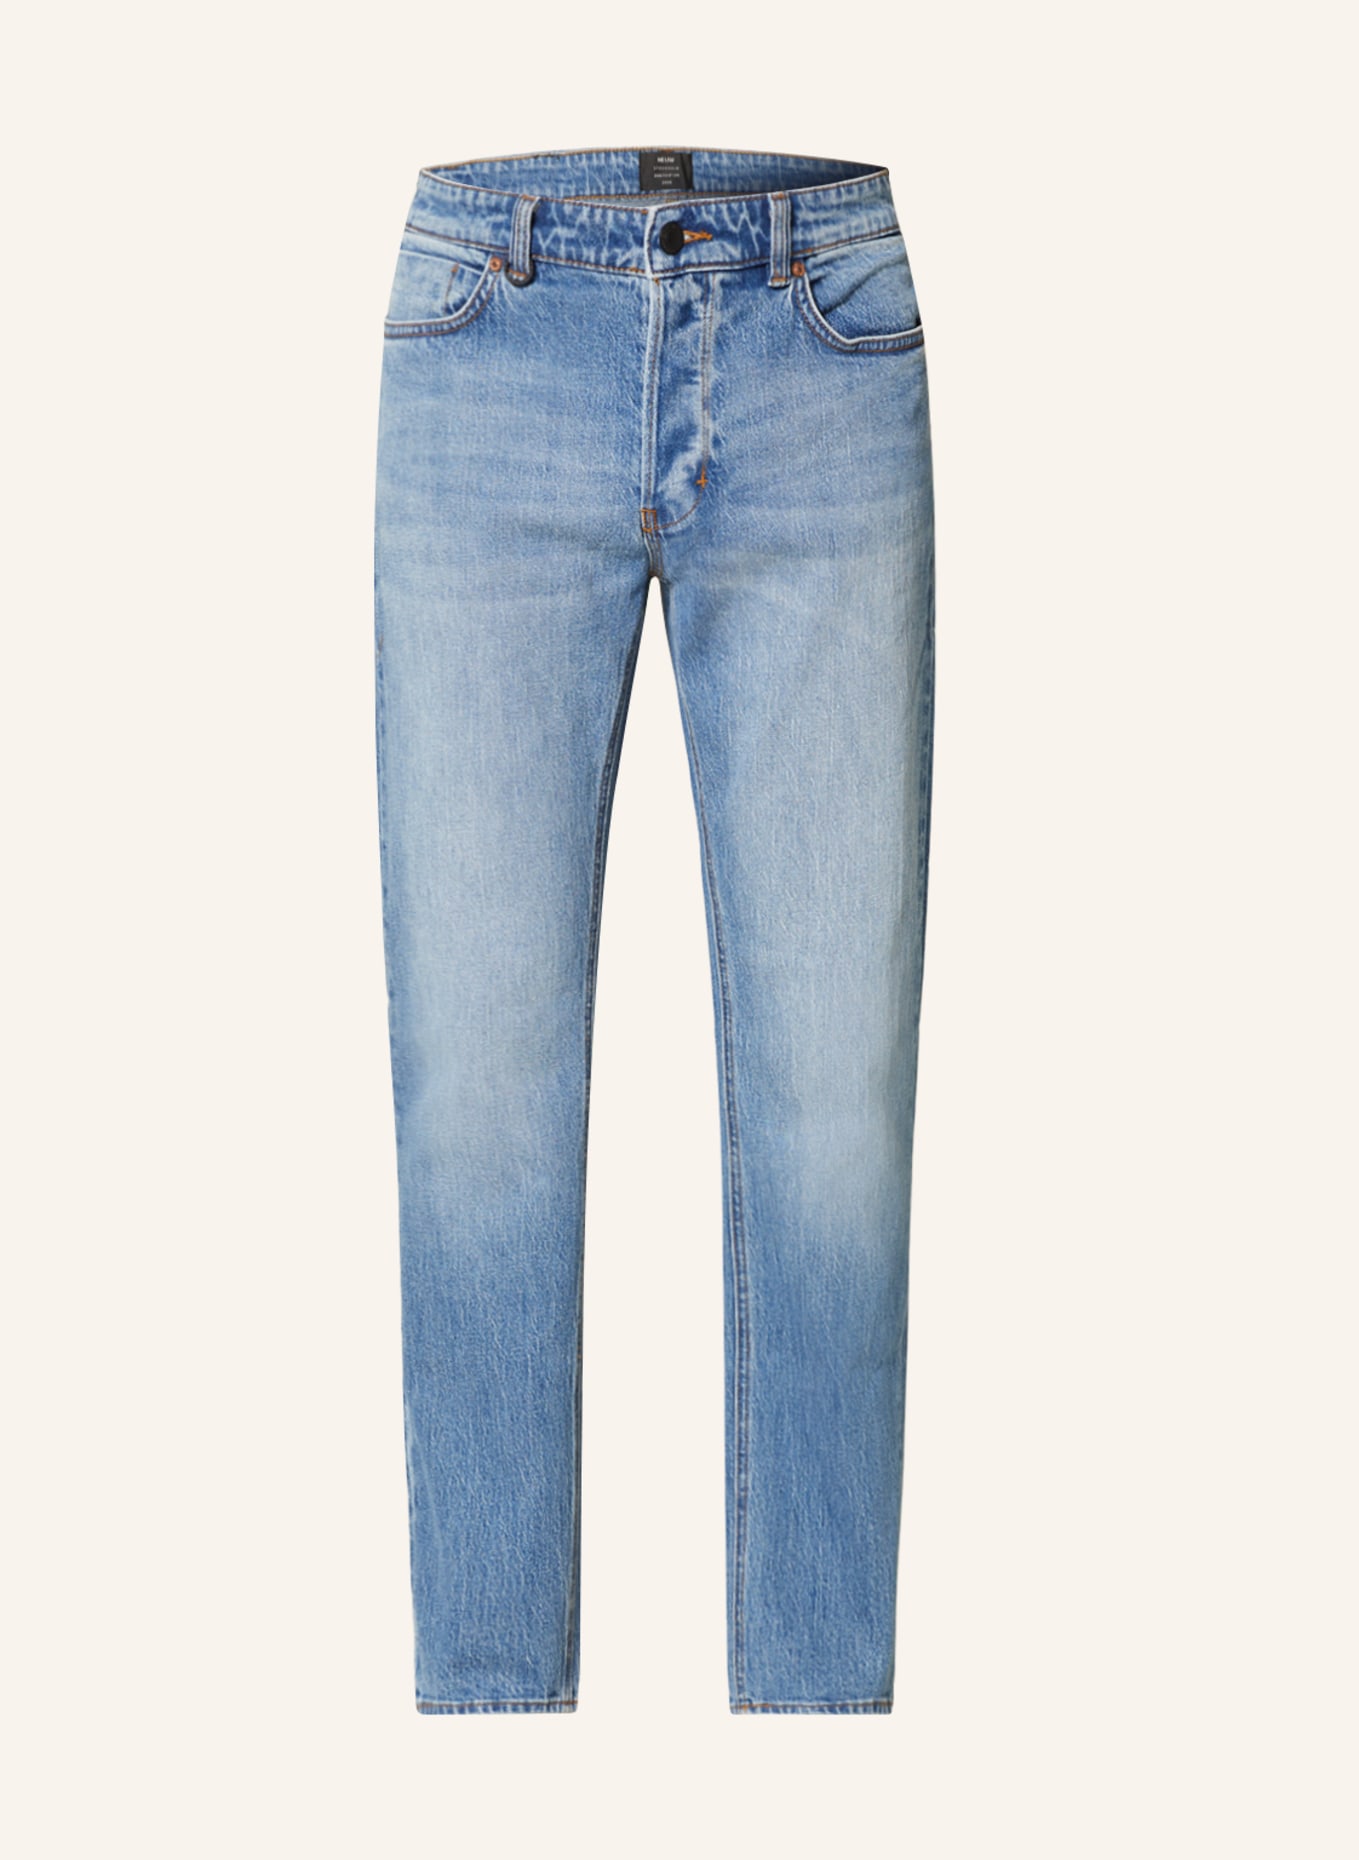 NEUW Jeans RAY Regular Fit, Farbe: Tempo (Bild 1)